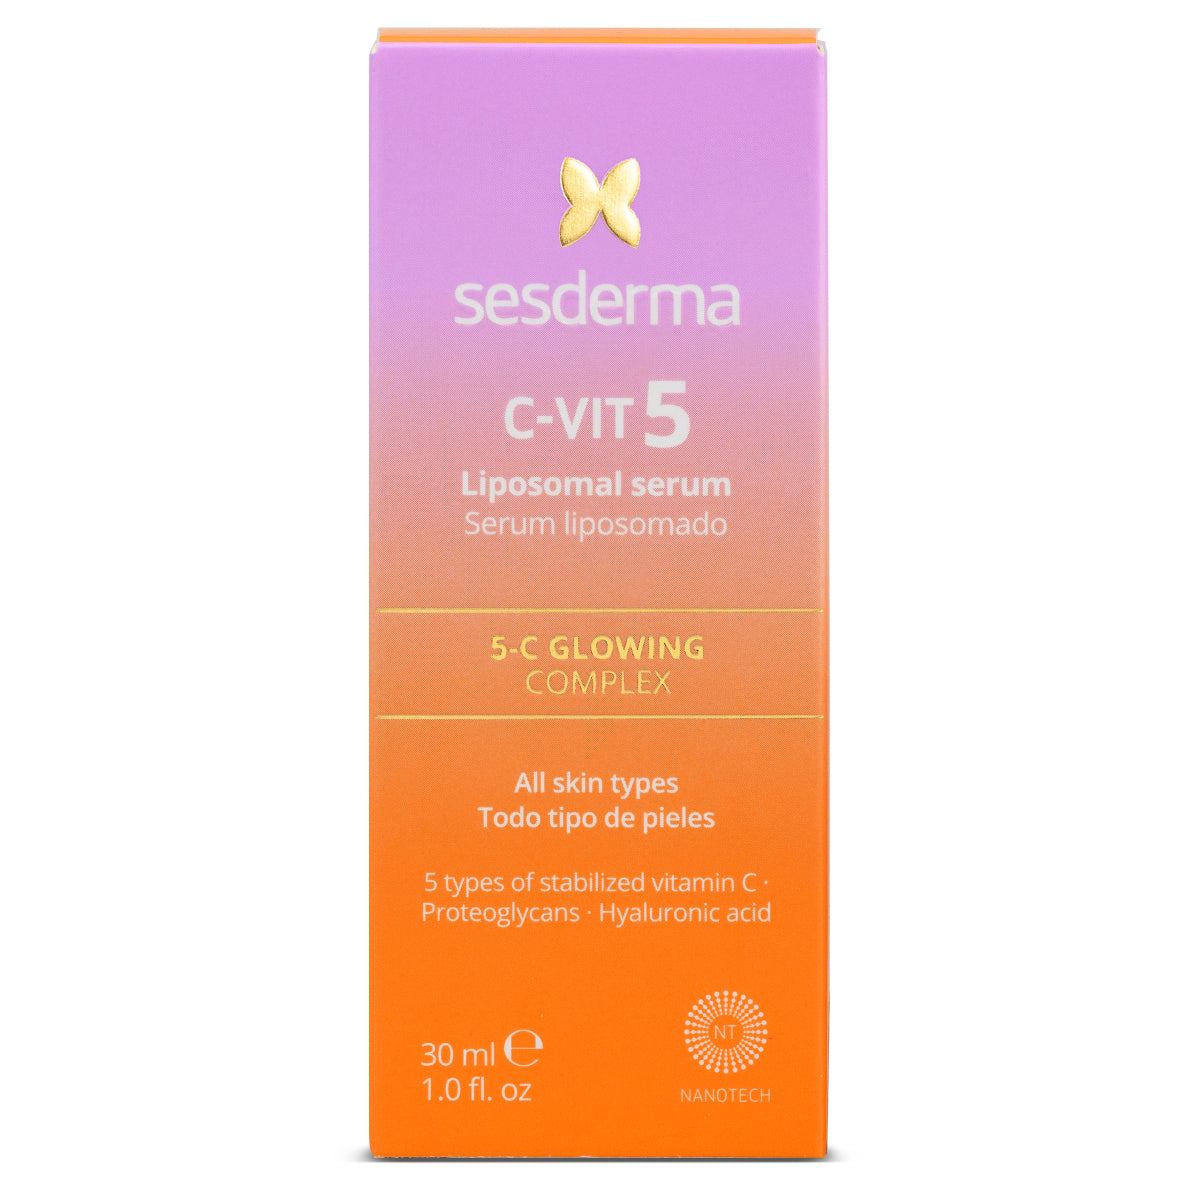 S-c-vit 5 vitamin serum 30ml.